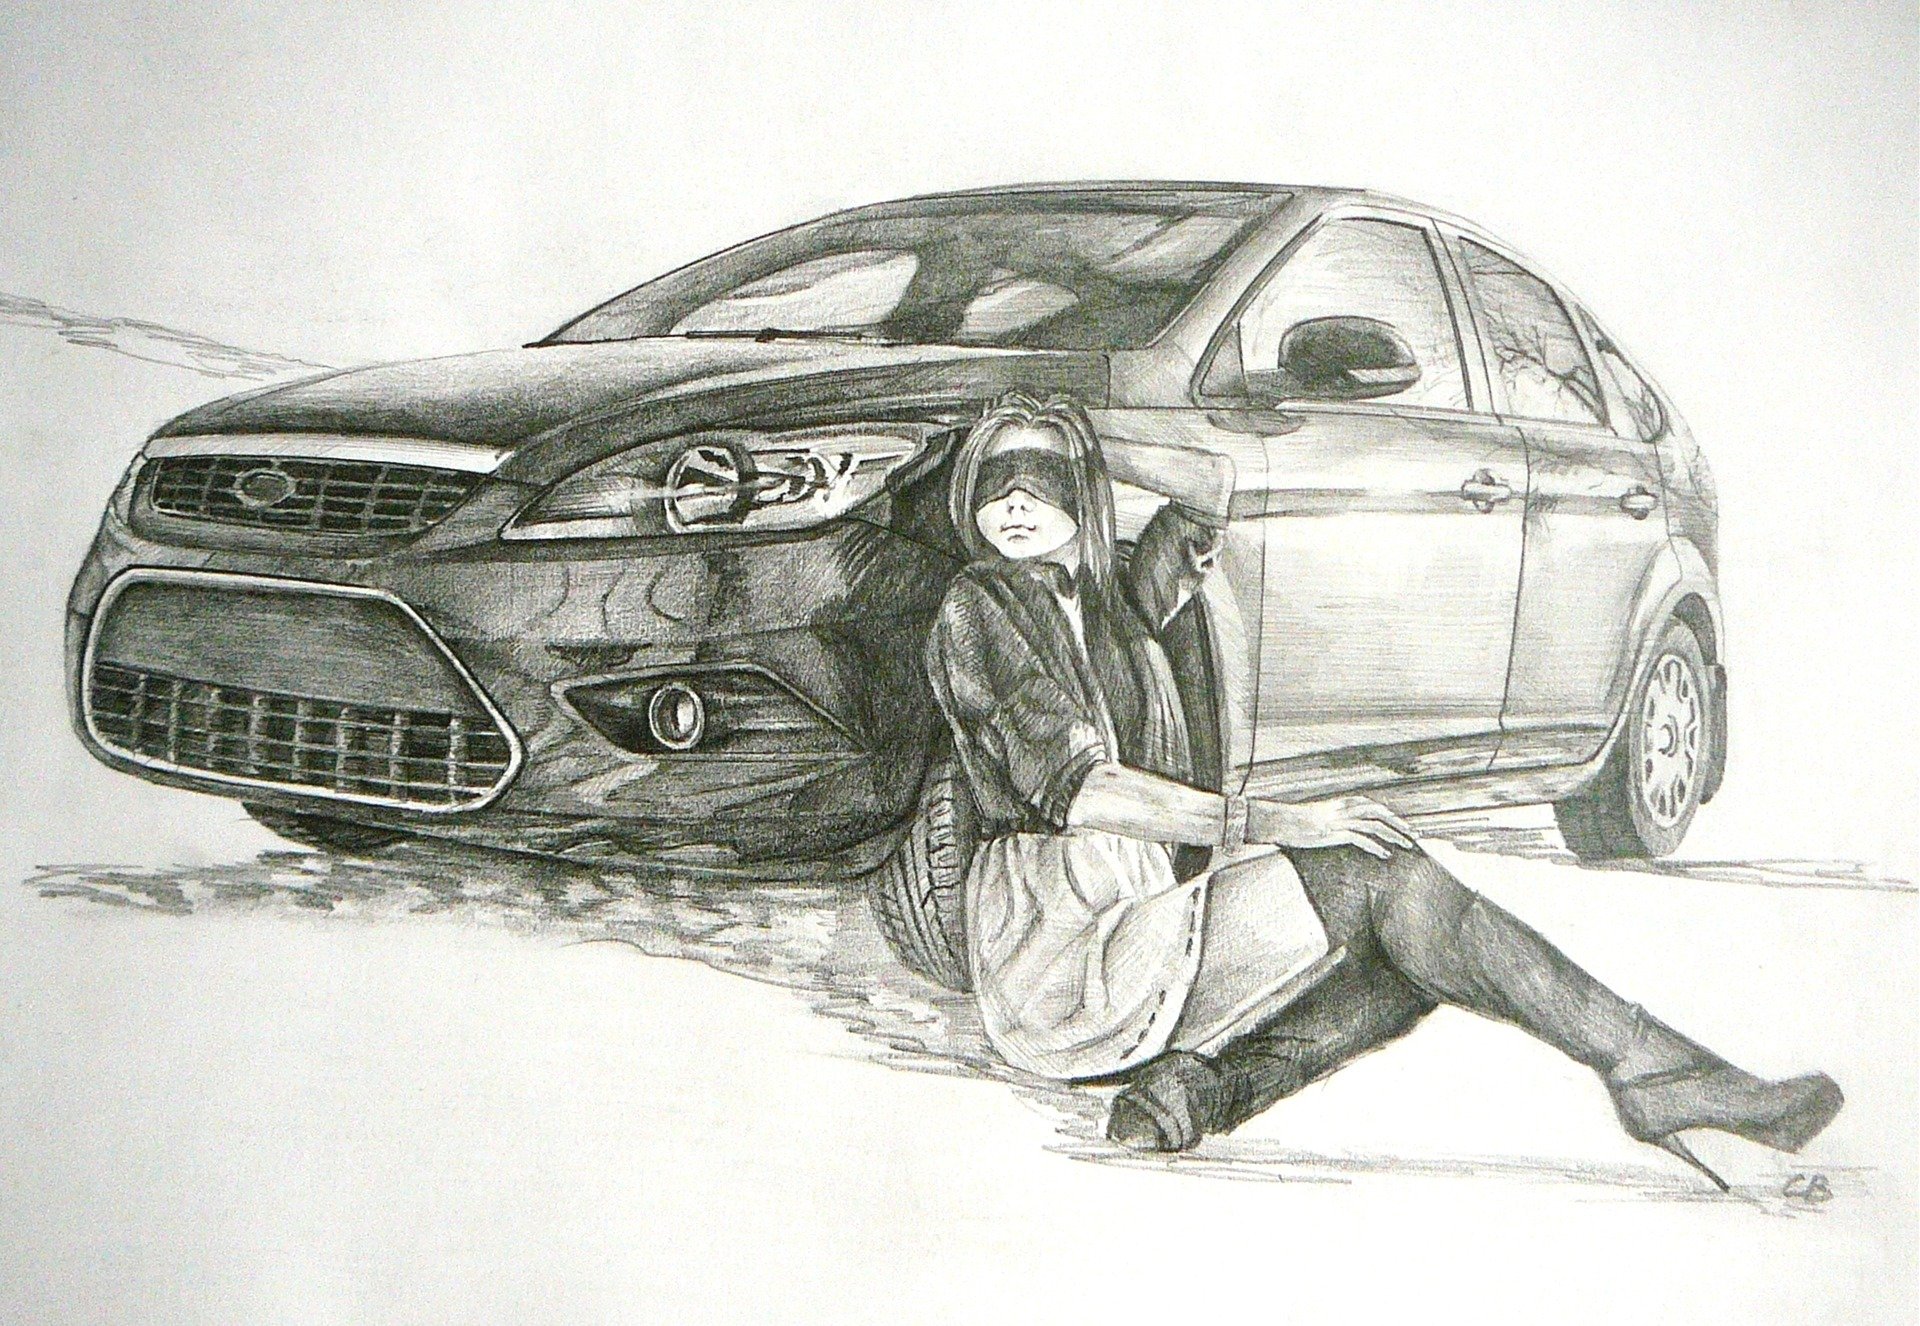 Рисунок автомобиля графика. Машина карандашом. Автомобиль рисунок. Рисунок автомобиля карандашом. Набросок машины карандашом.